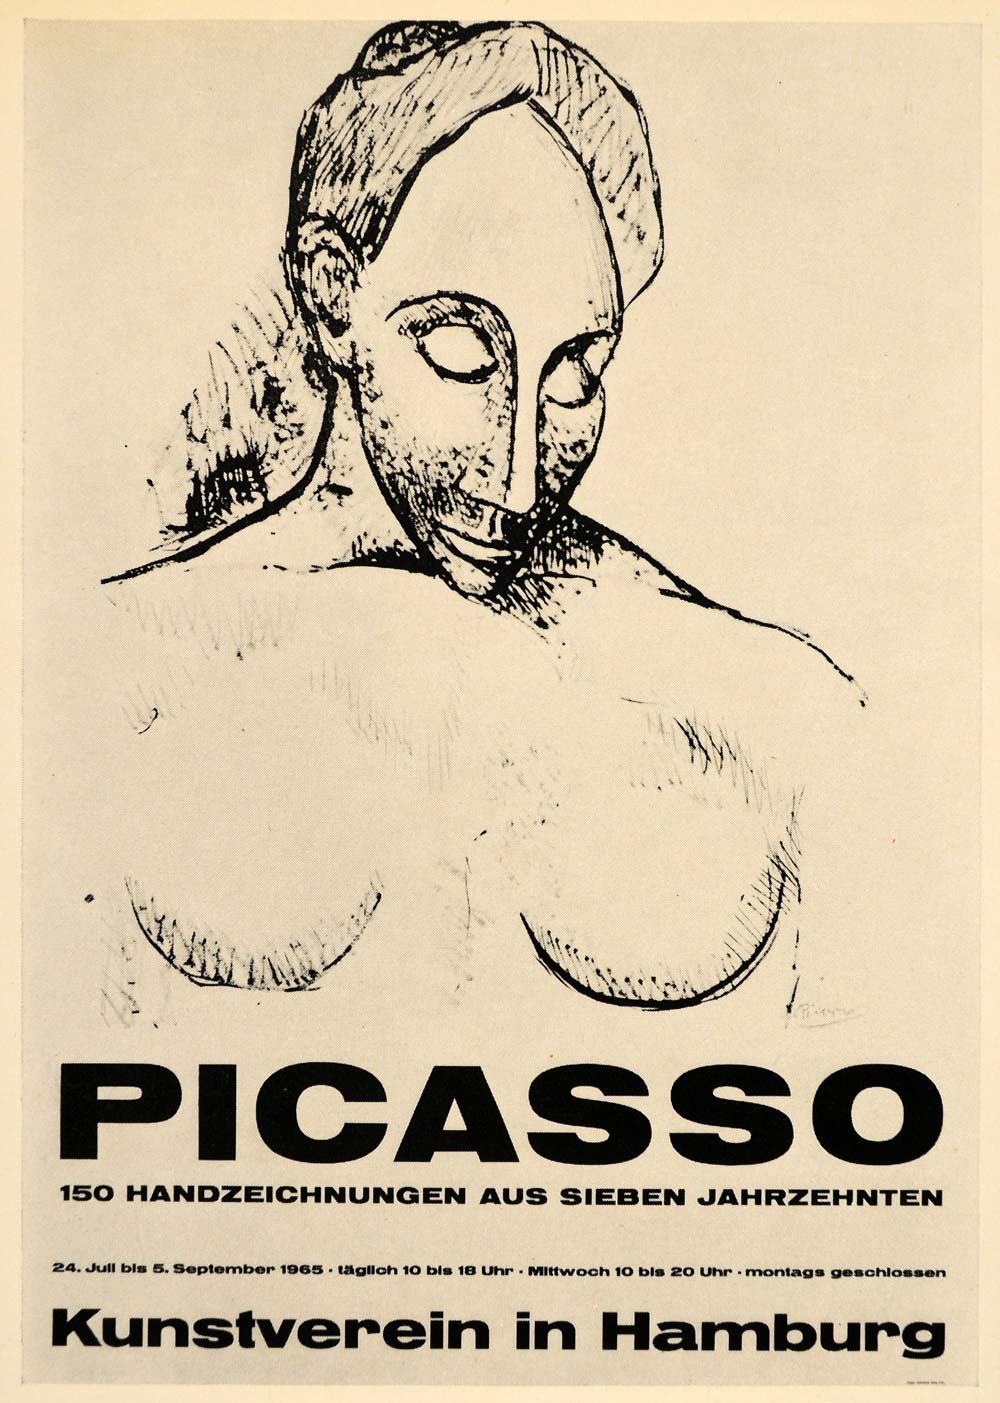 1971 Print Picasso Nude Kunstverein Hamburg Poster 1965 - ORIGINAL PIC3